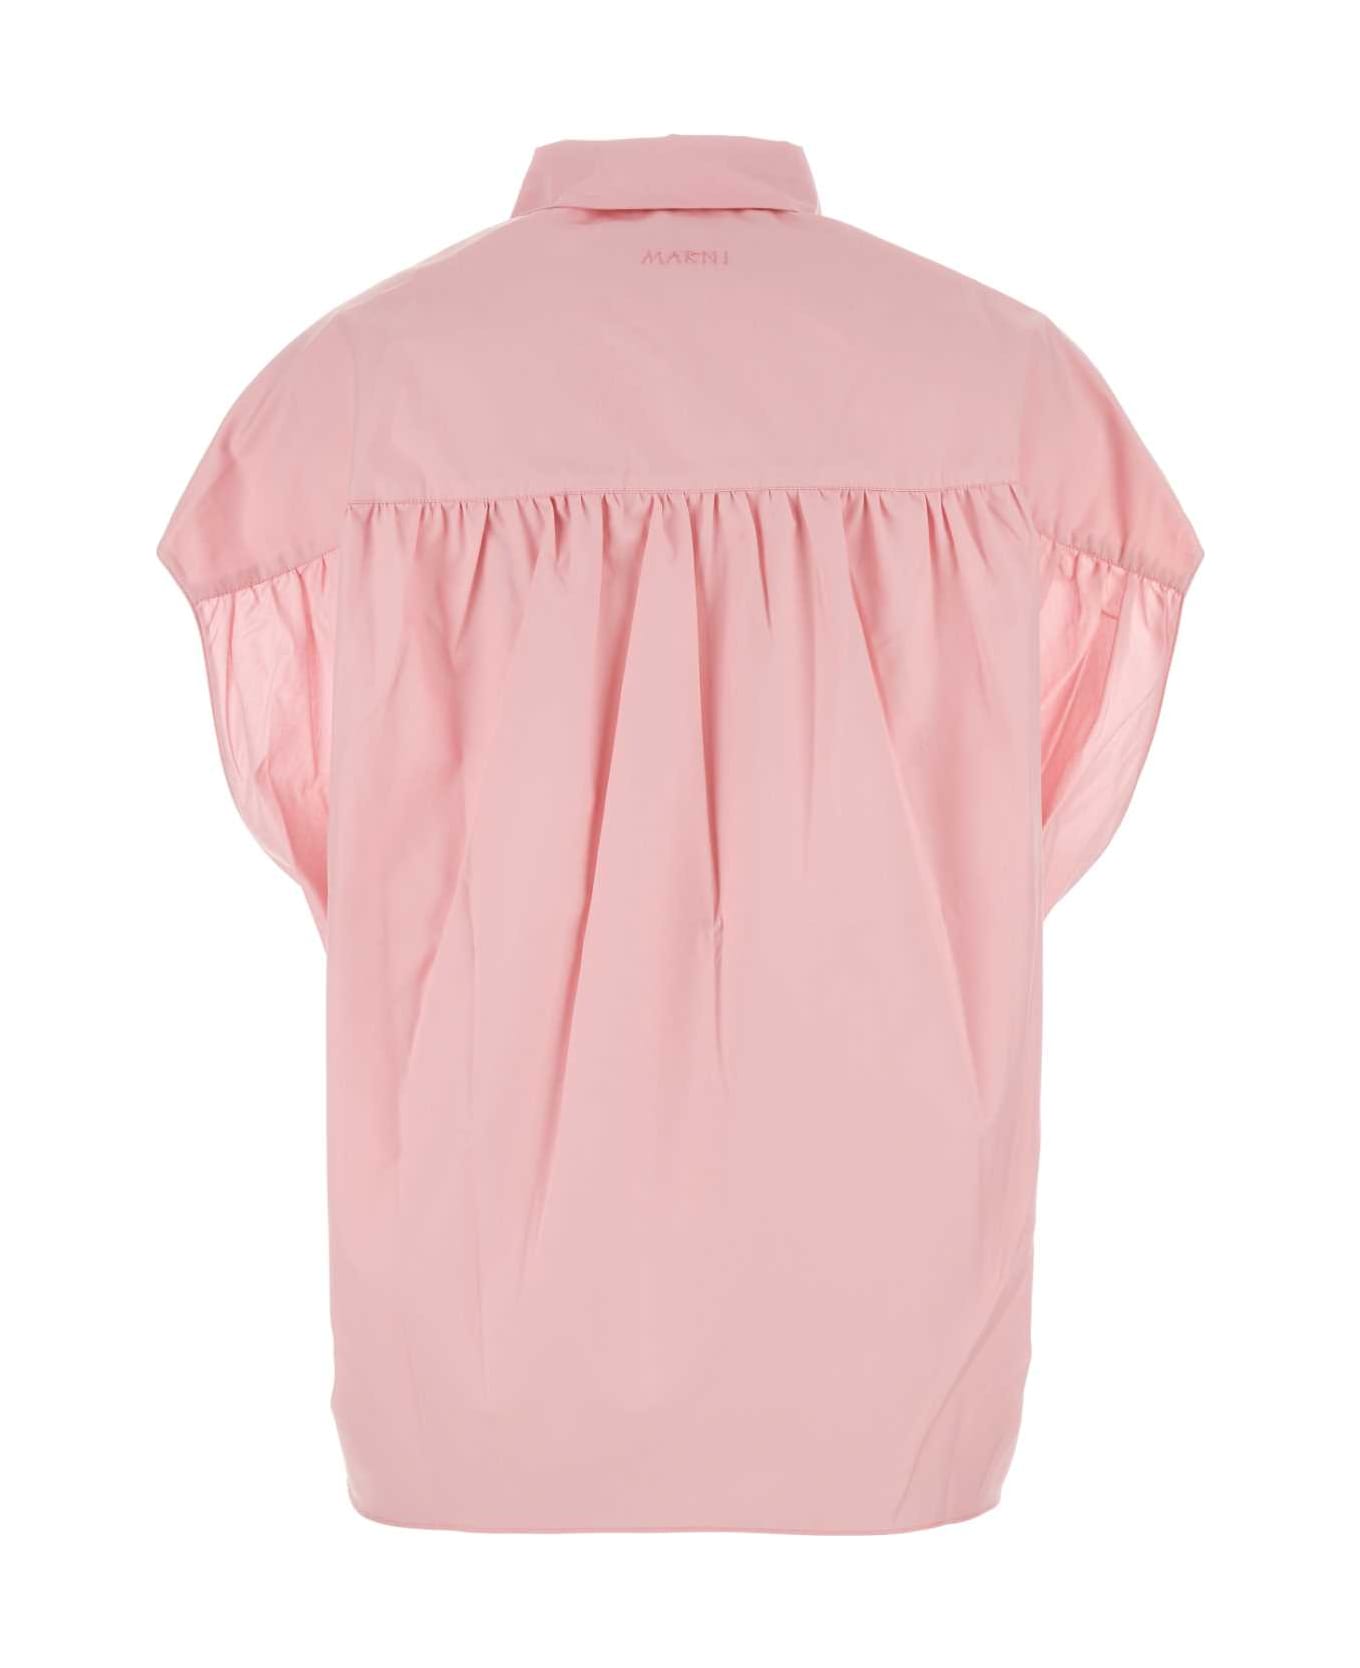 Marni Pink Poplin Shirt - PEONY シャツ